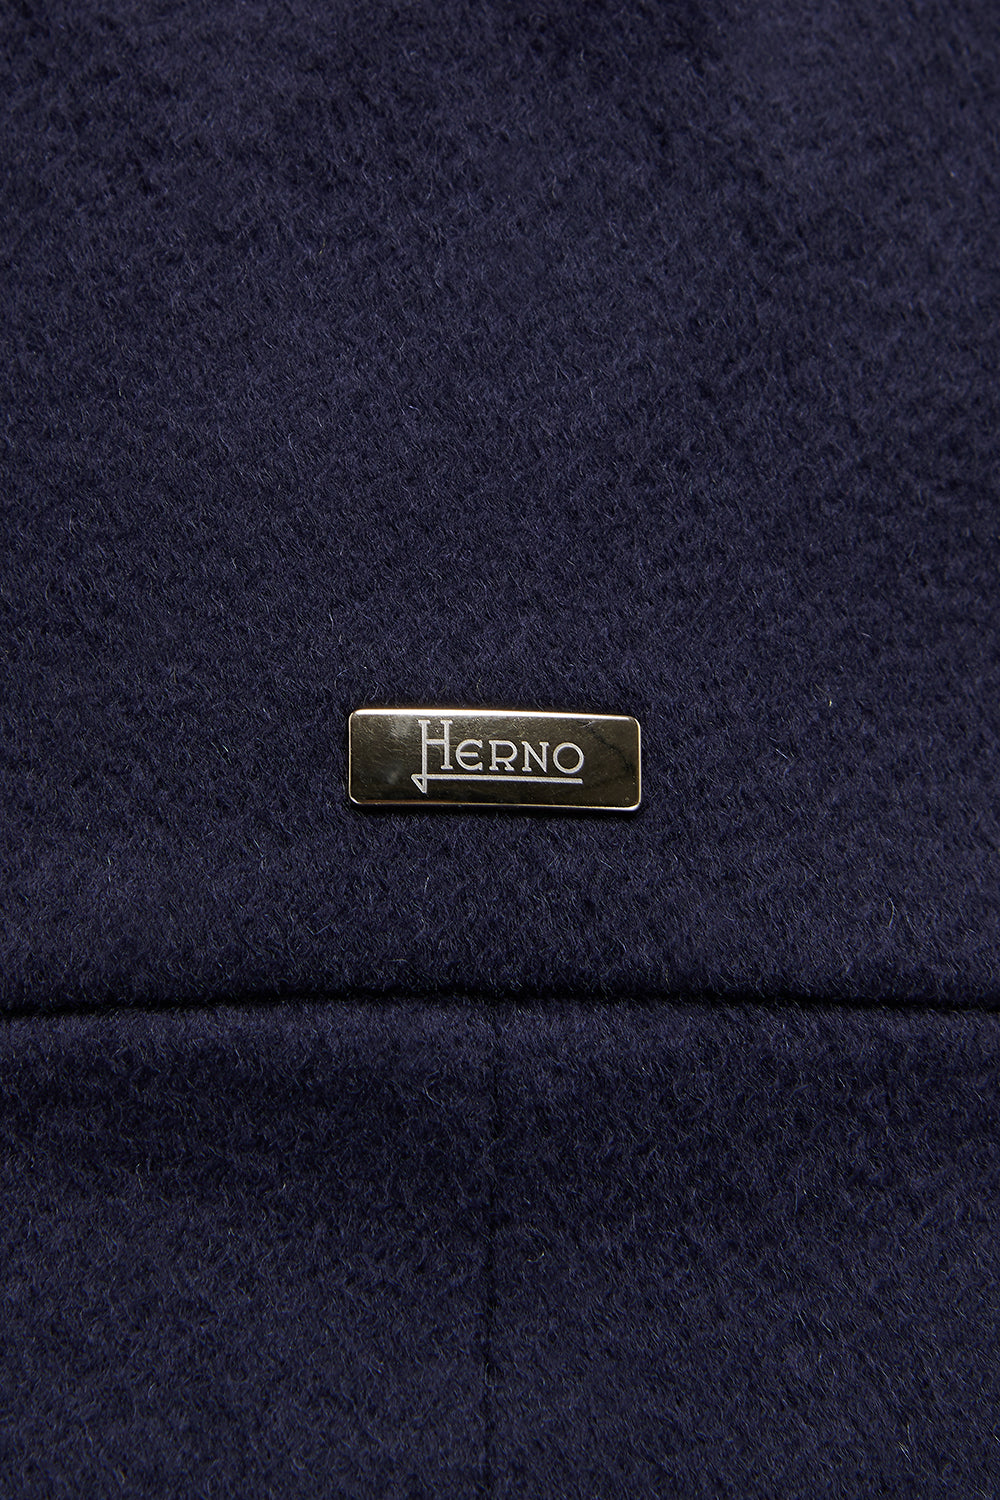 Herno Women’s Wool & Nylon Coat Blue - Close Up Logo